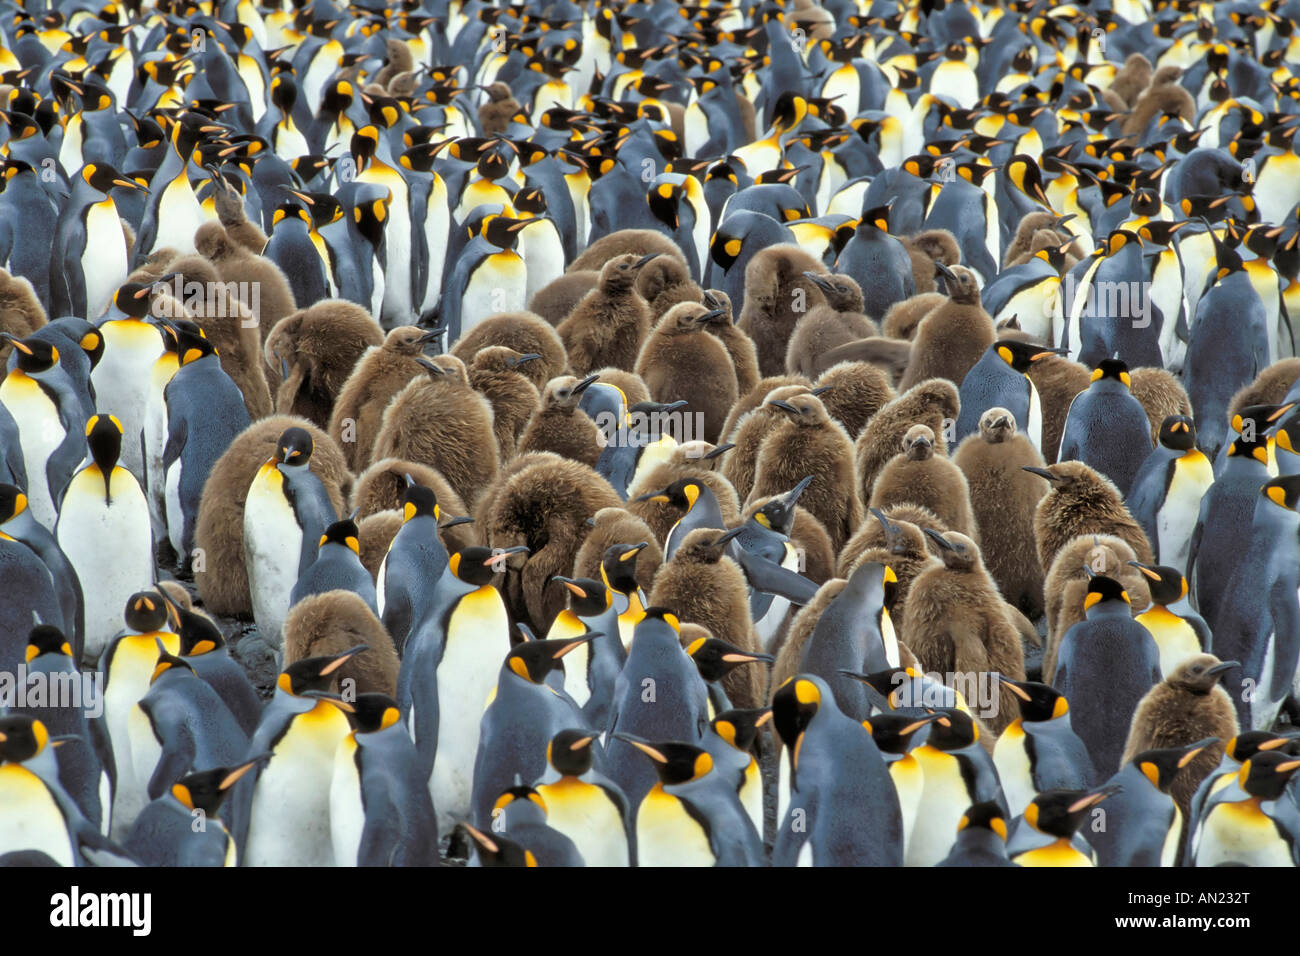 King penguin Koenigspinguin Aptenodytes patagonicus Salisbury plain South Georgia Pinguinkolonie colony peng Stock Photo